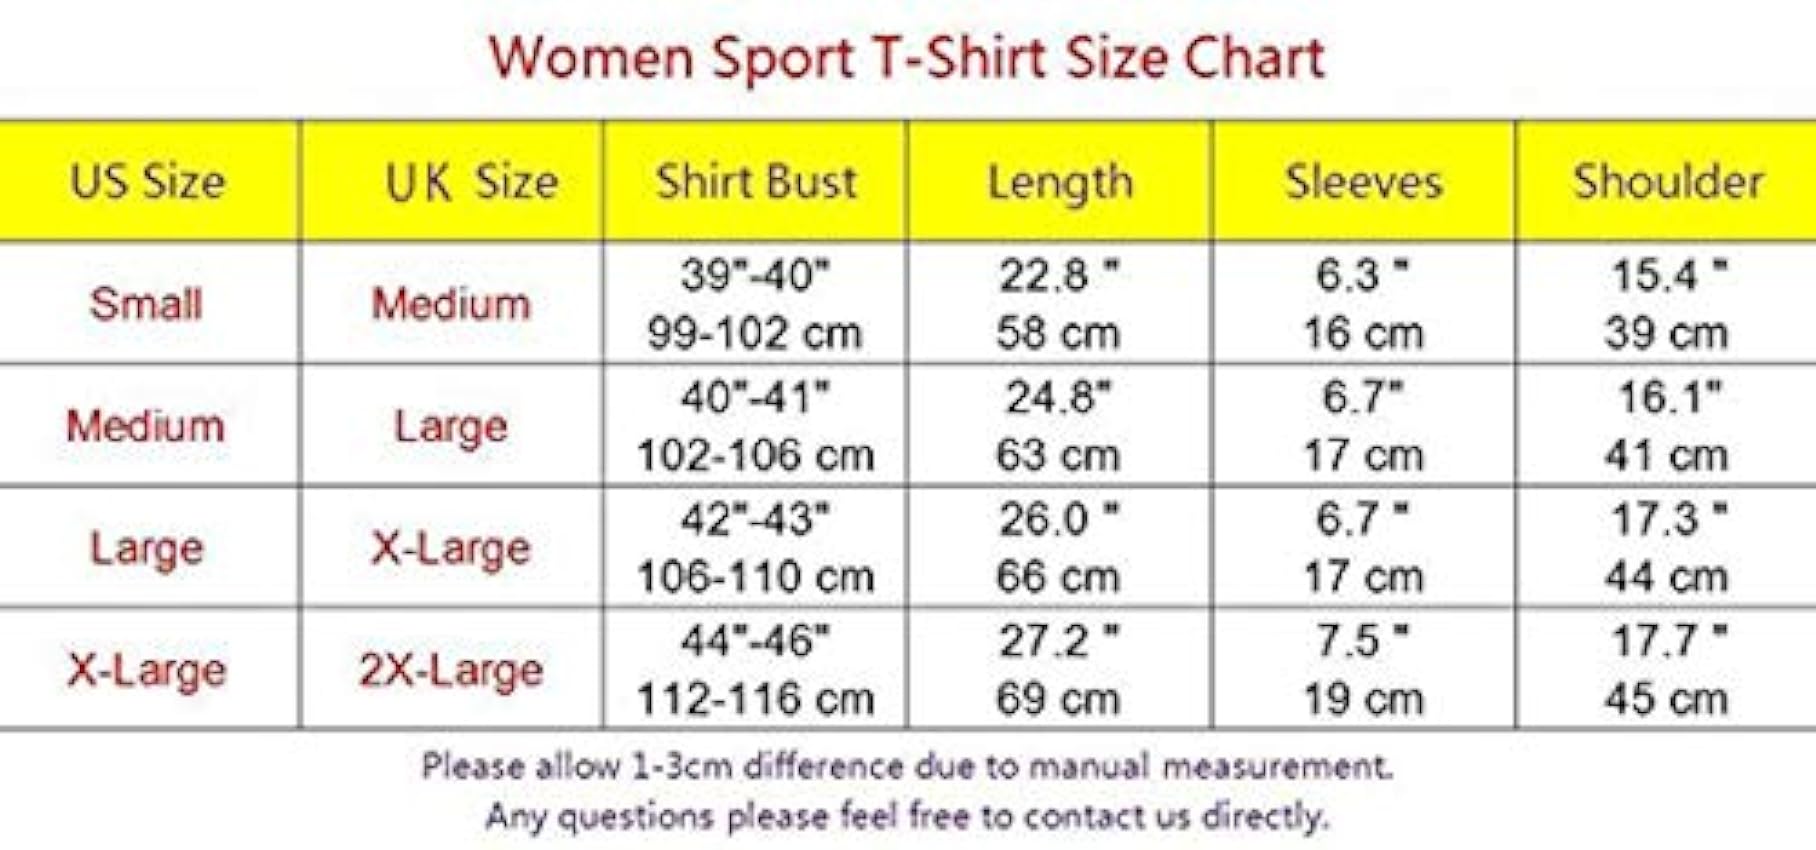 jeansian Femme Sport Slim Breathable Short Sleeve T-Shirt Tee Tops SWT251 LClg3J6j